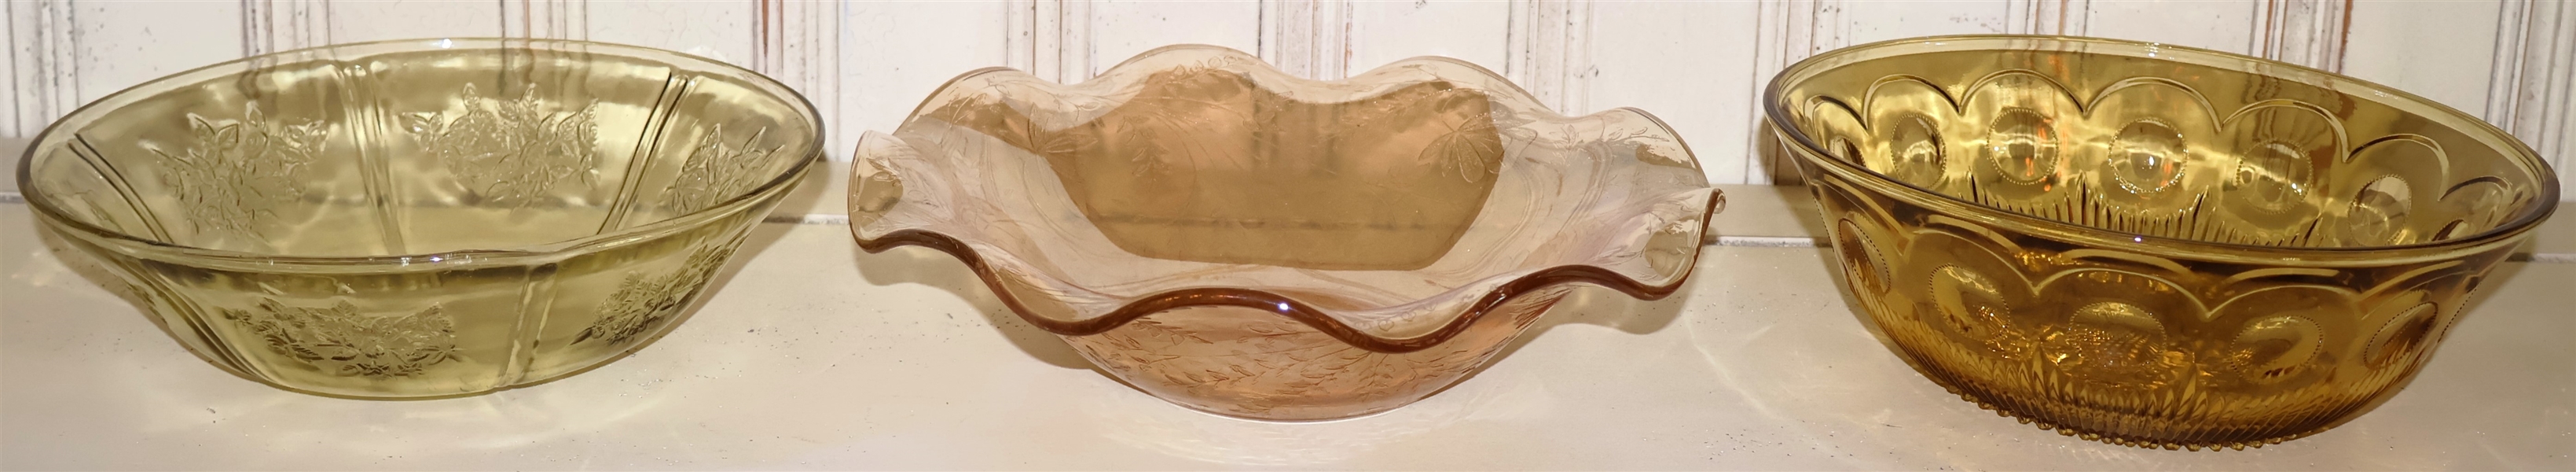 3 Depression Glass Bowls - Iridized Ruffle Edge Bowl Measures 9 3/4" Across